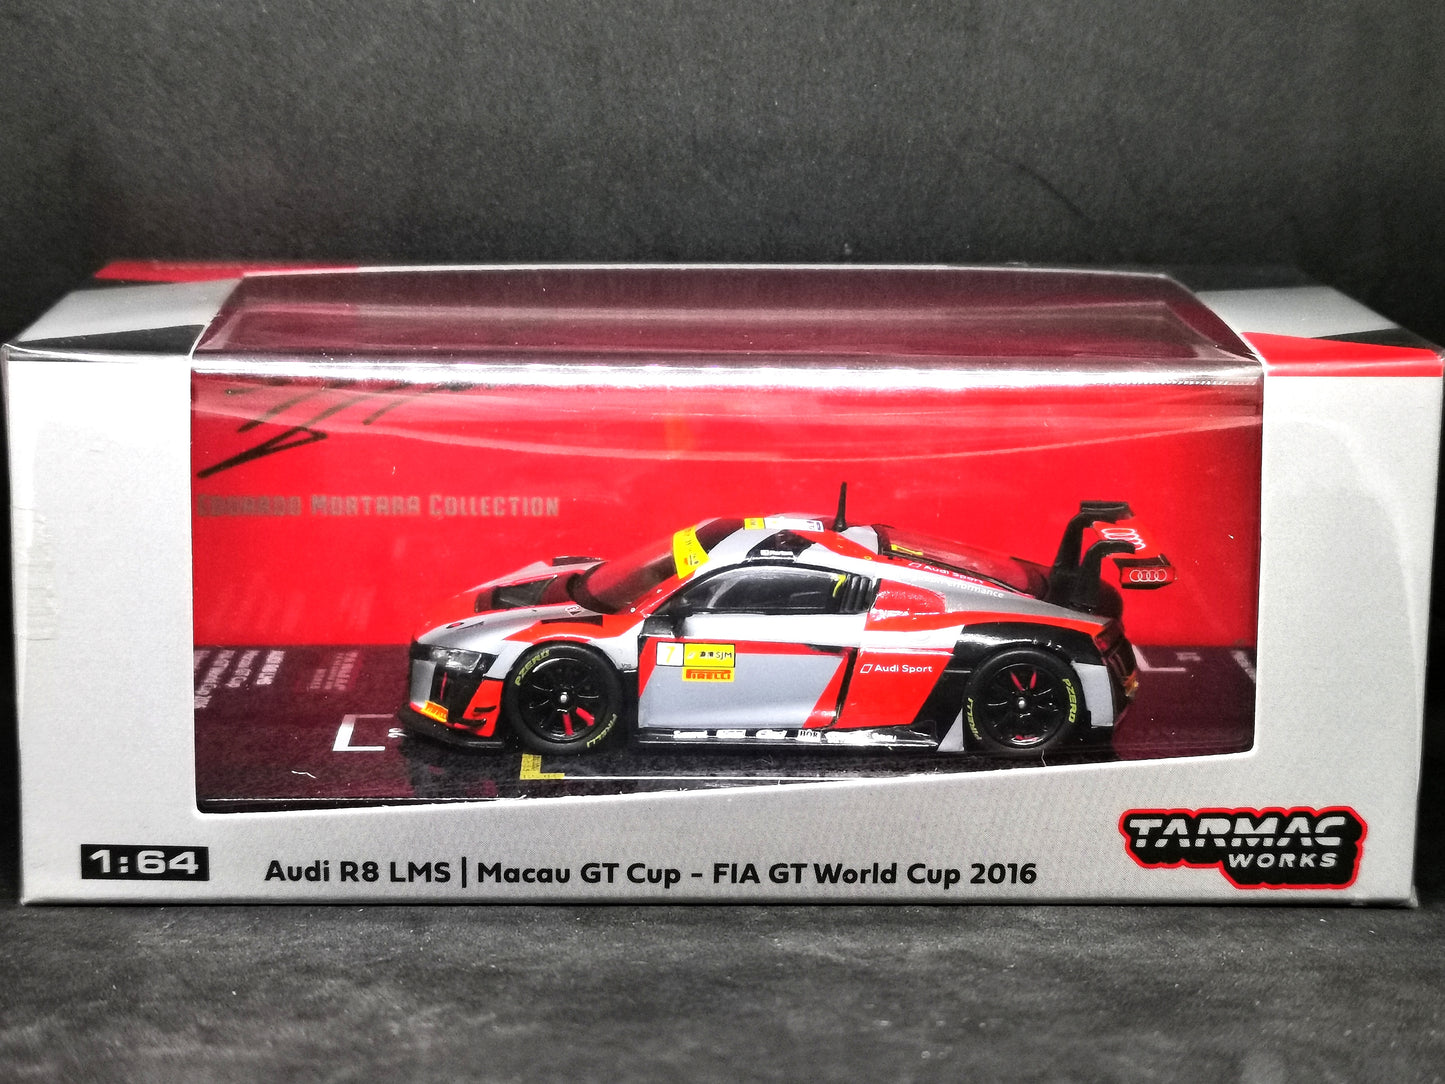 Tarmacworks Audi R8 LMS Macau GT Cup- FIA GT World Cup 2016